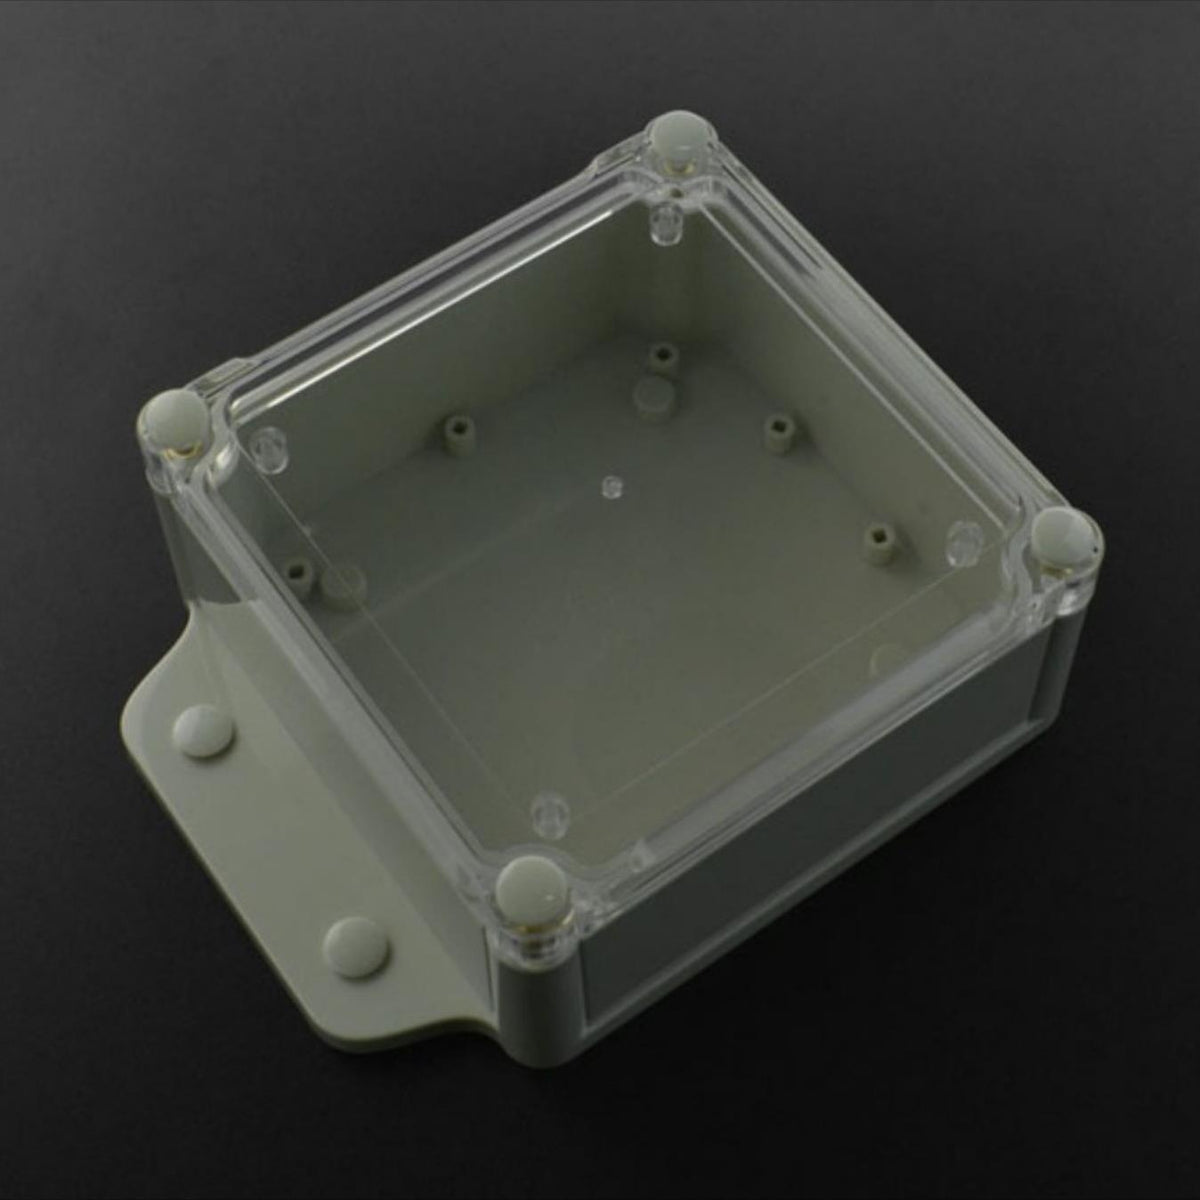 DFRobot Plastic Project Box Enclosure Waterproof Clear Cover - RobotShop